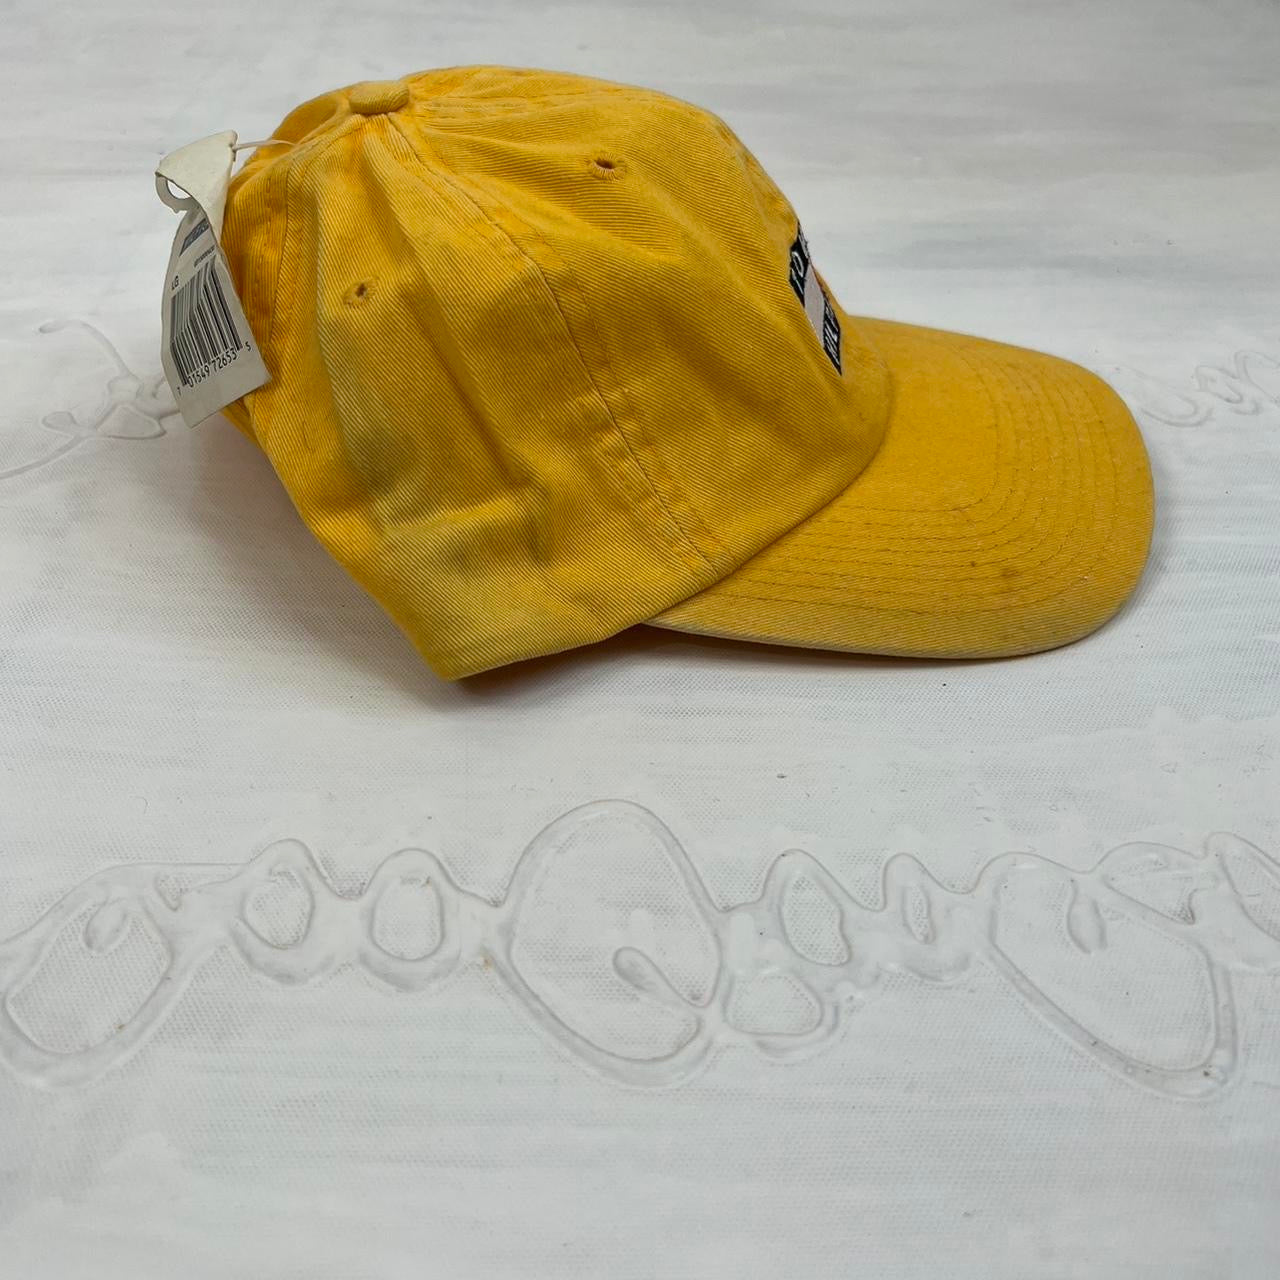 POSH AND BECKS DROP | yellow tommy hilfiger cap